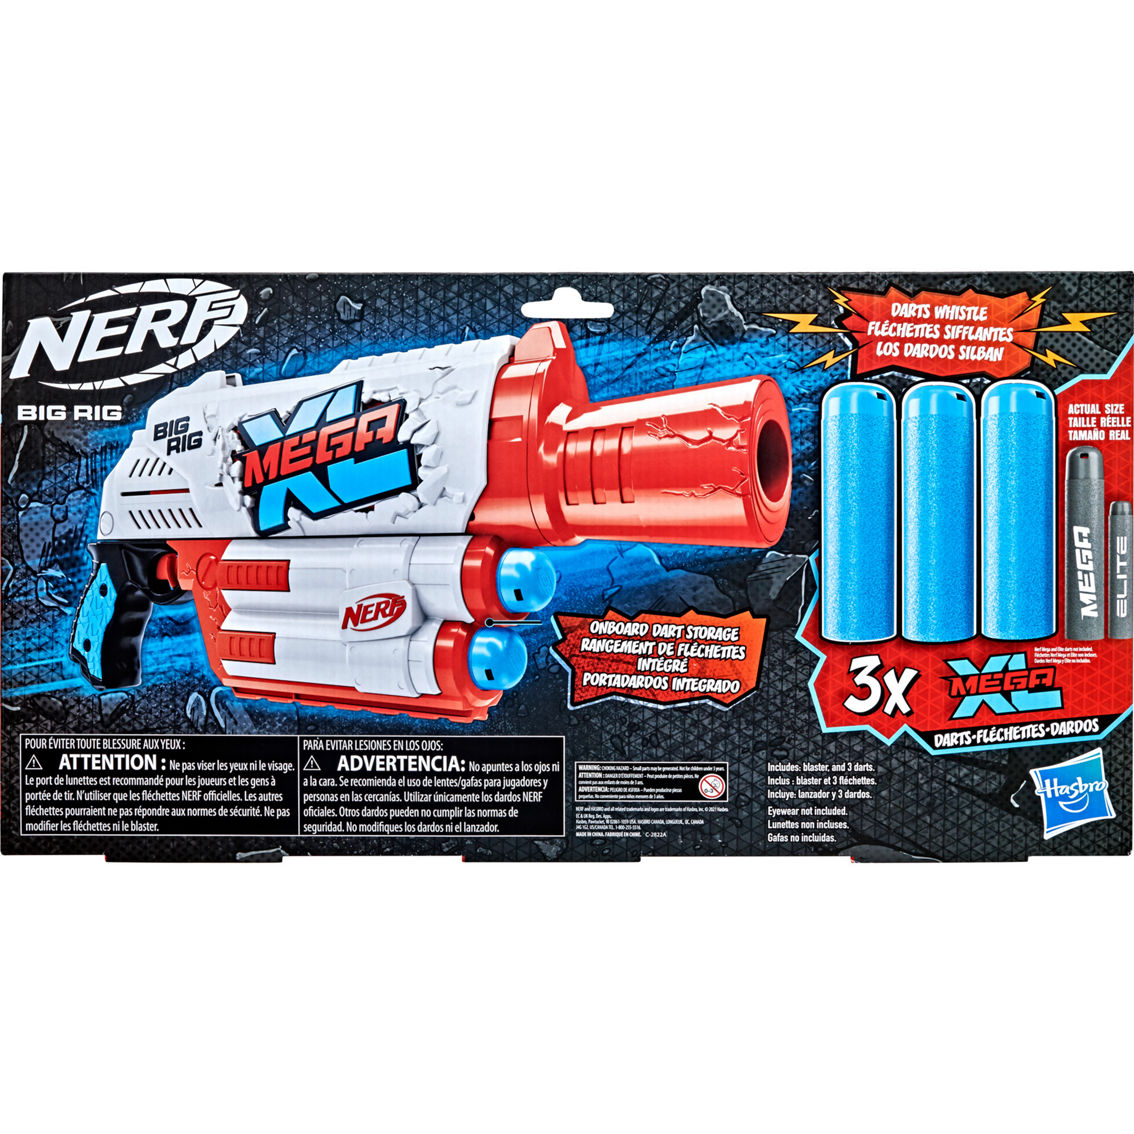 Nerf Mega XL Big Rig Blaster Toy - Image 2 of 6